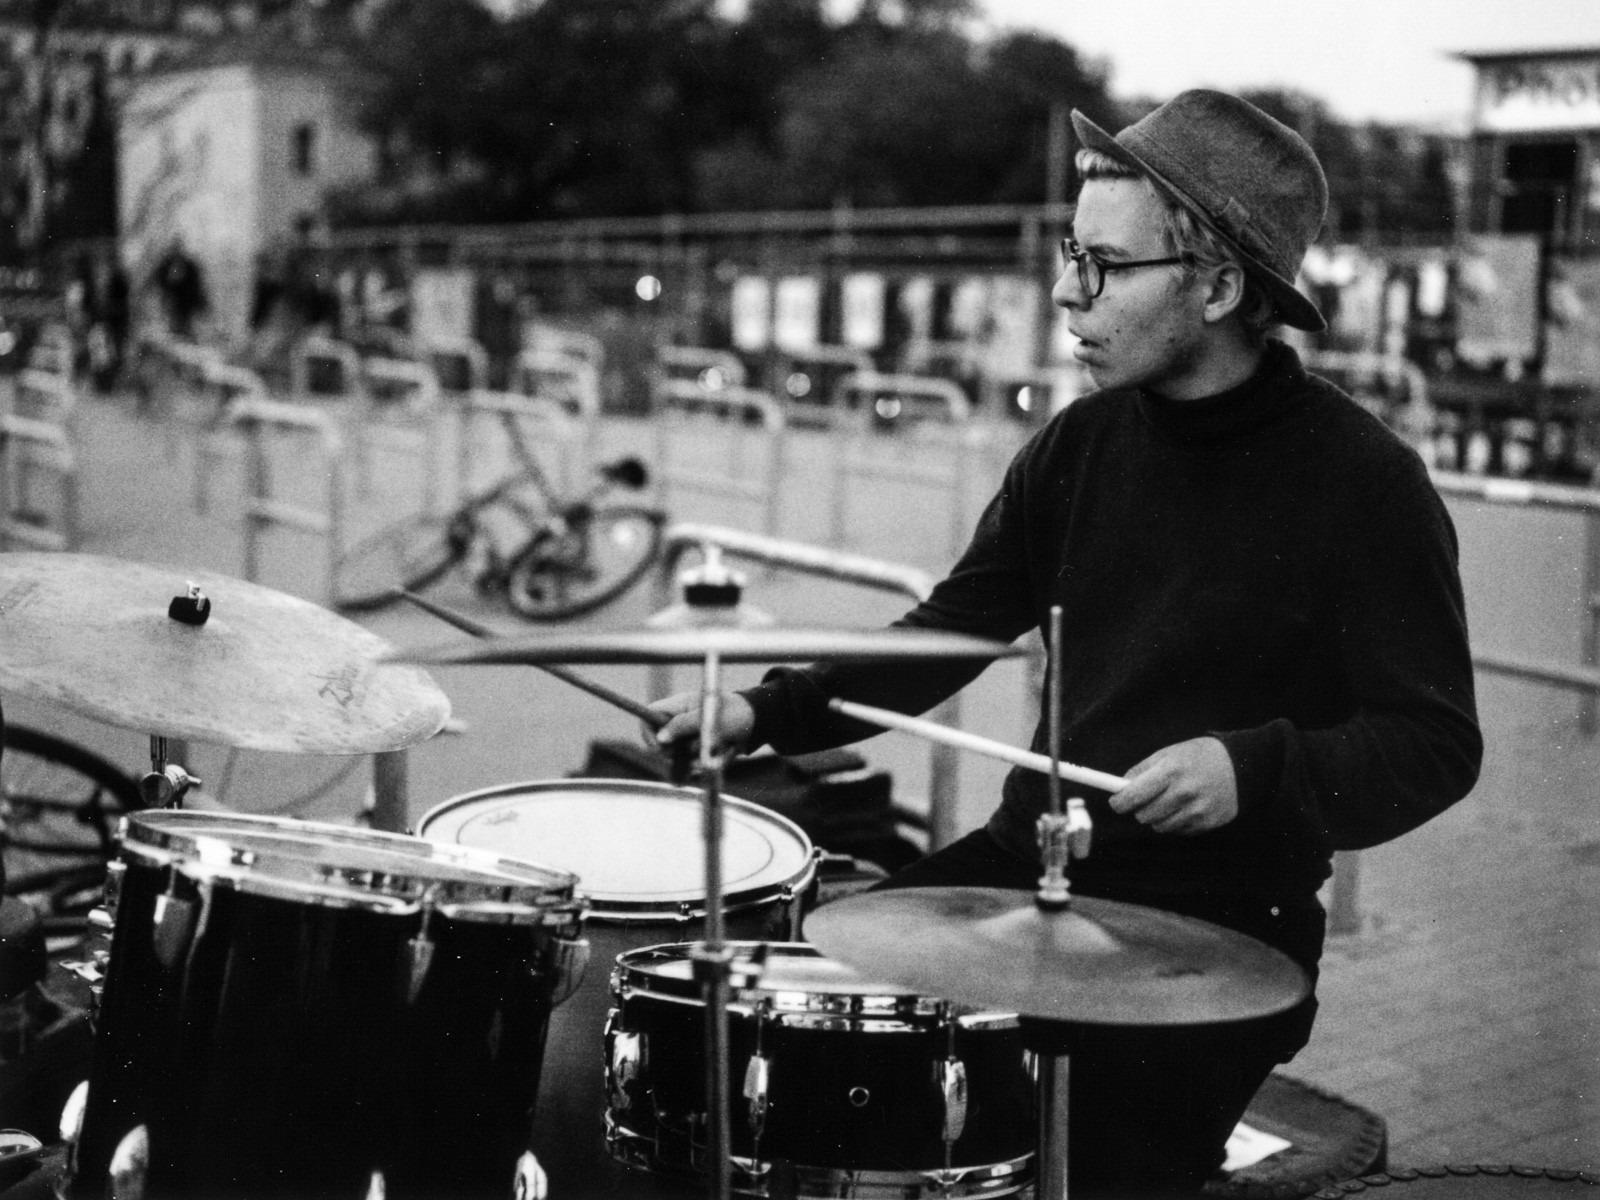 drums musician black and white portrait environmental fuji fp3000b